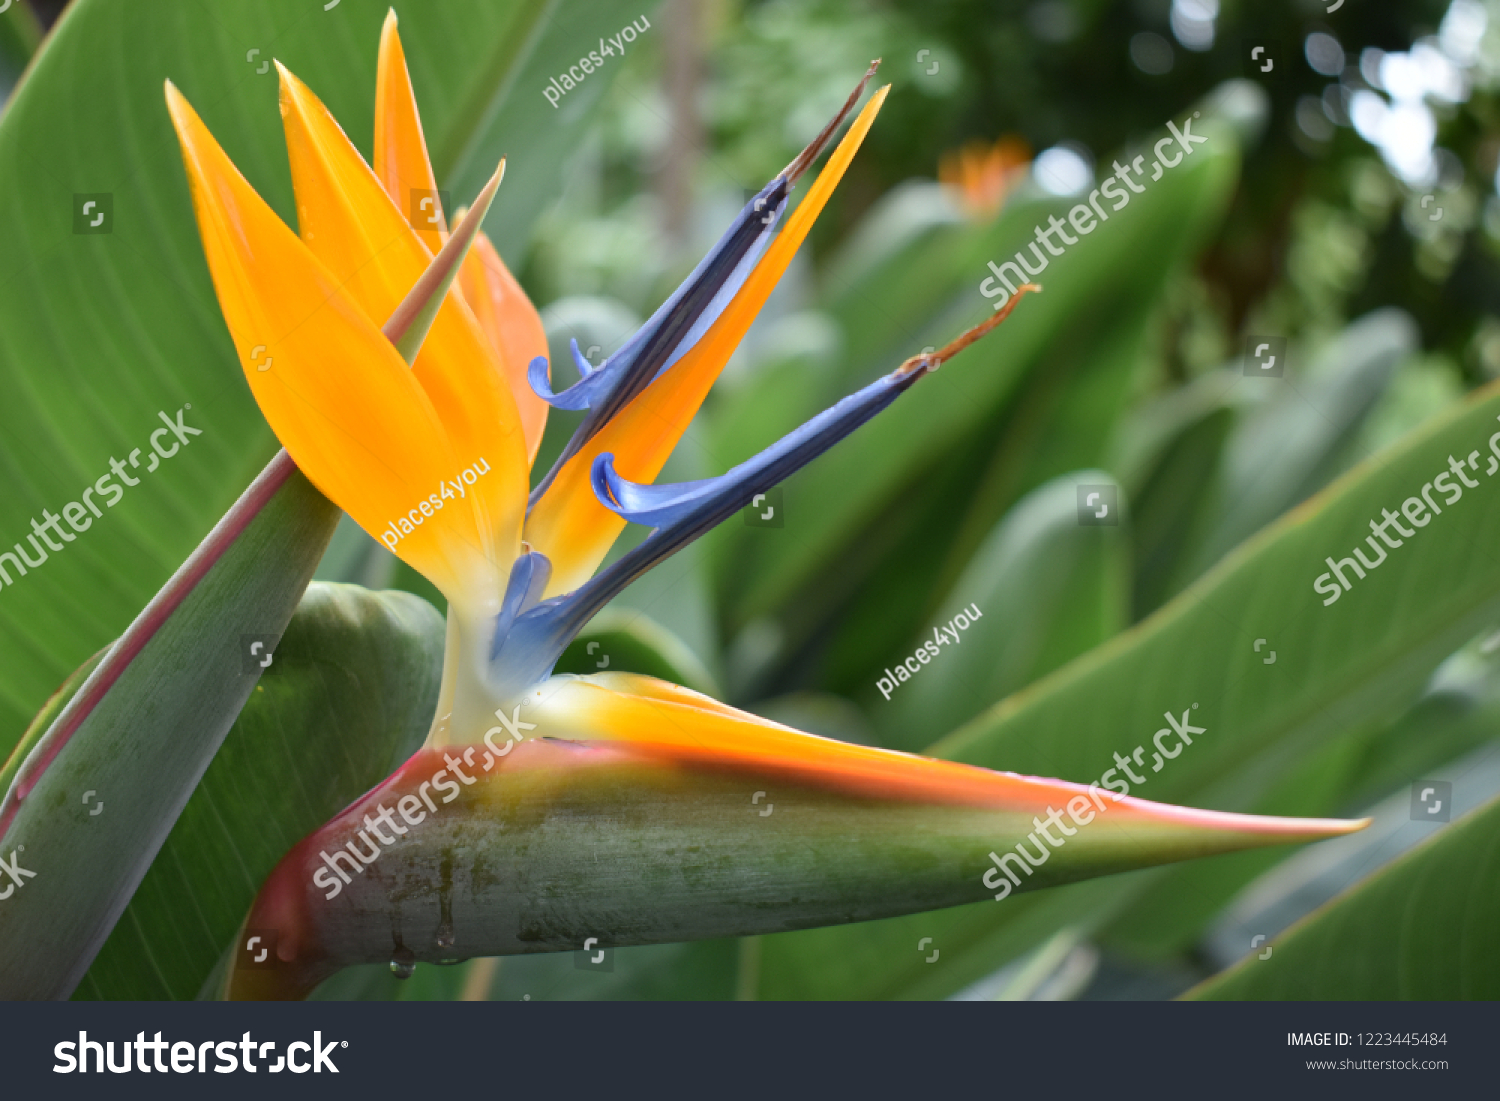 Closeup of a colorful strelitzia plant – bird of paradise flower #1223445484